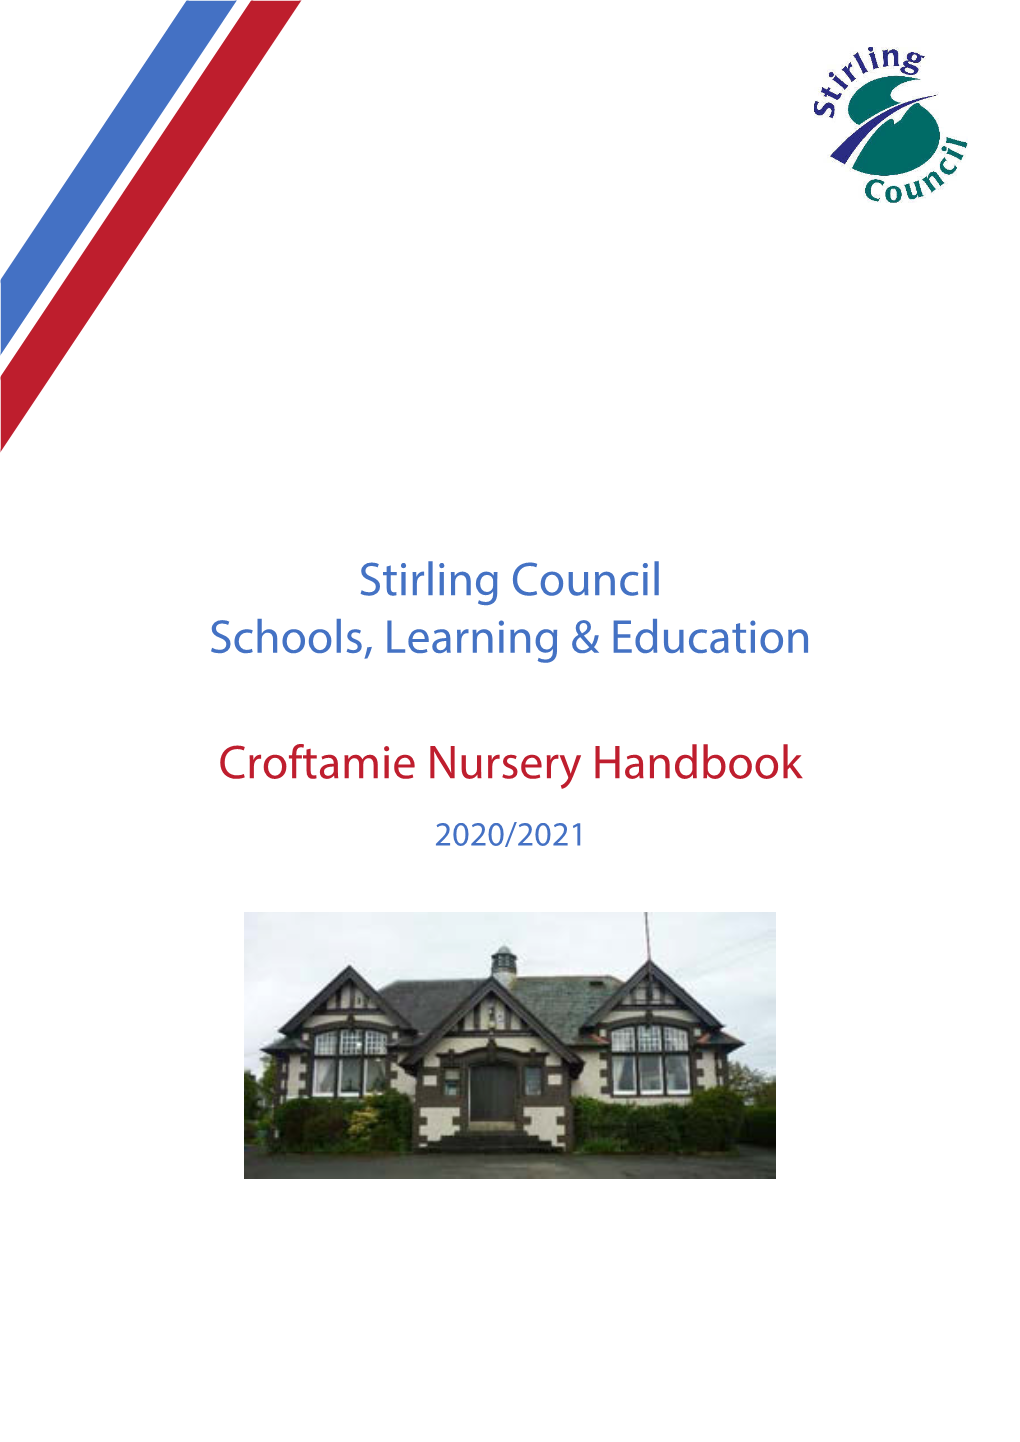 Stirling Council Schools, Learning & Education Croftamie Nursery